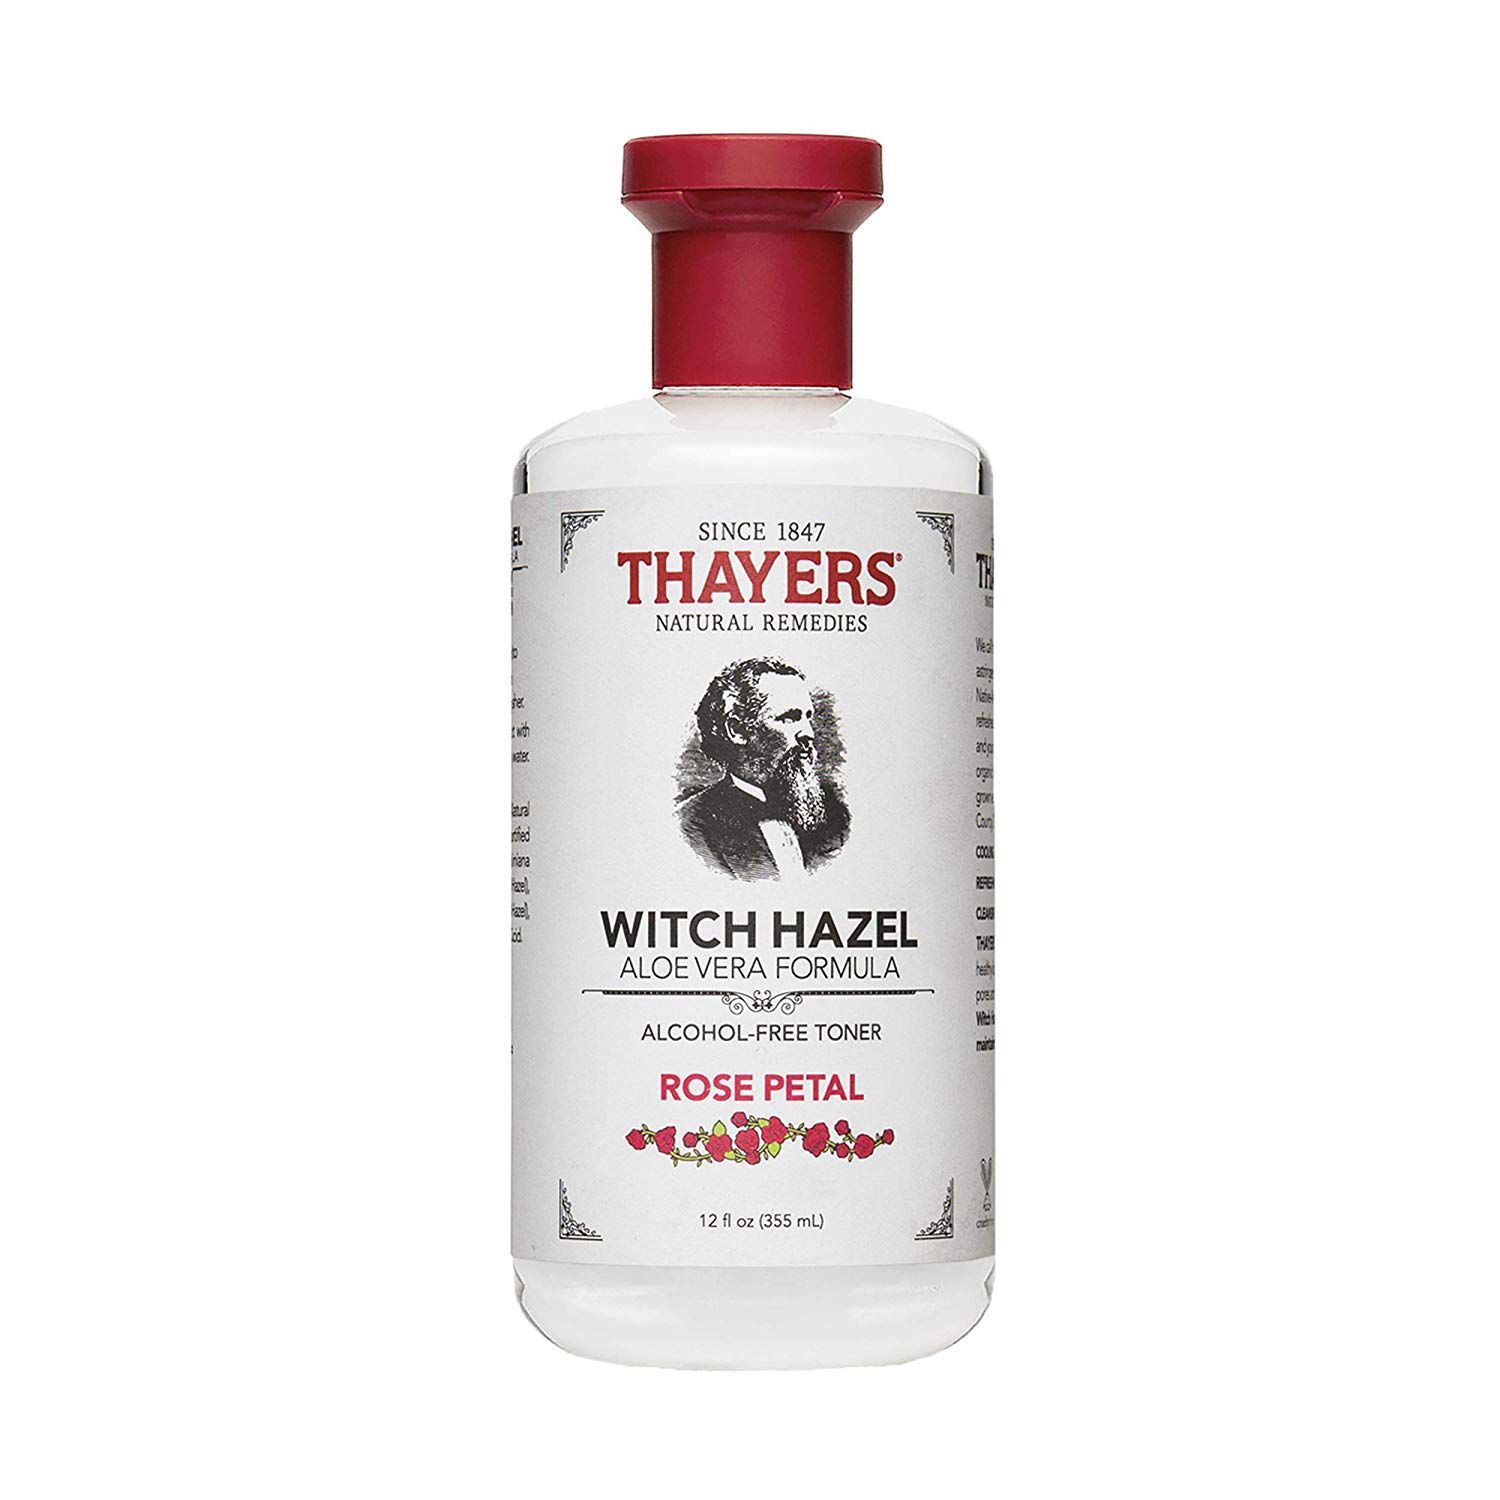 Thayers Rose Petal Witch Hazel with Aloe Vera